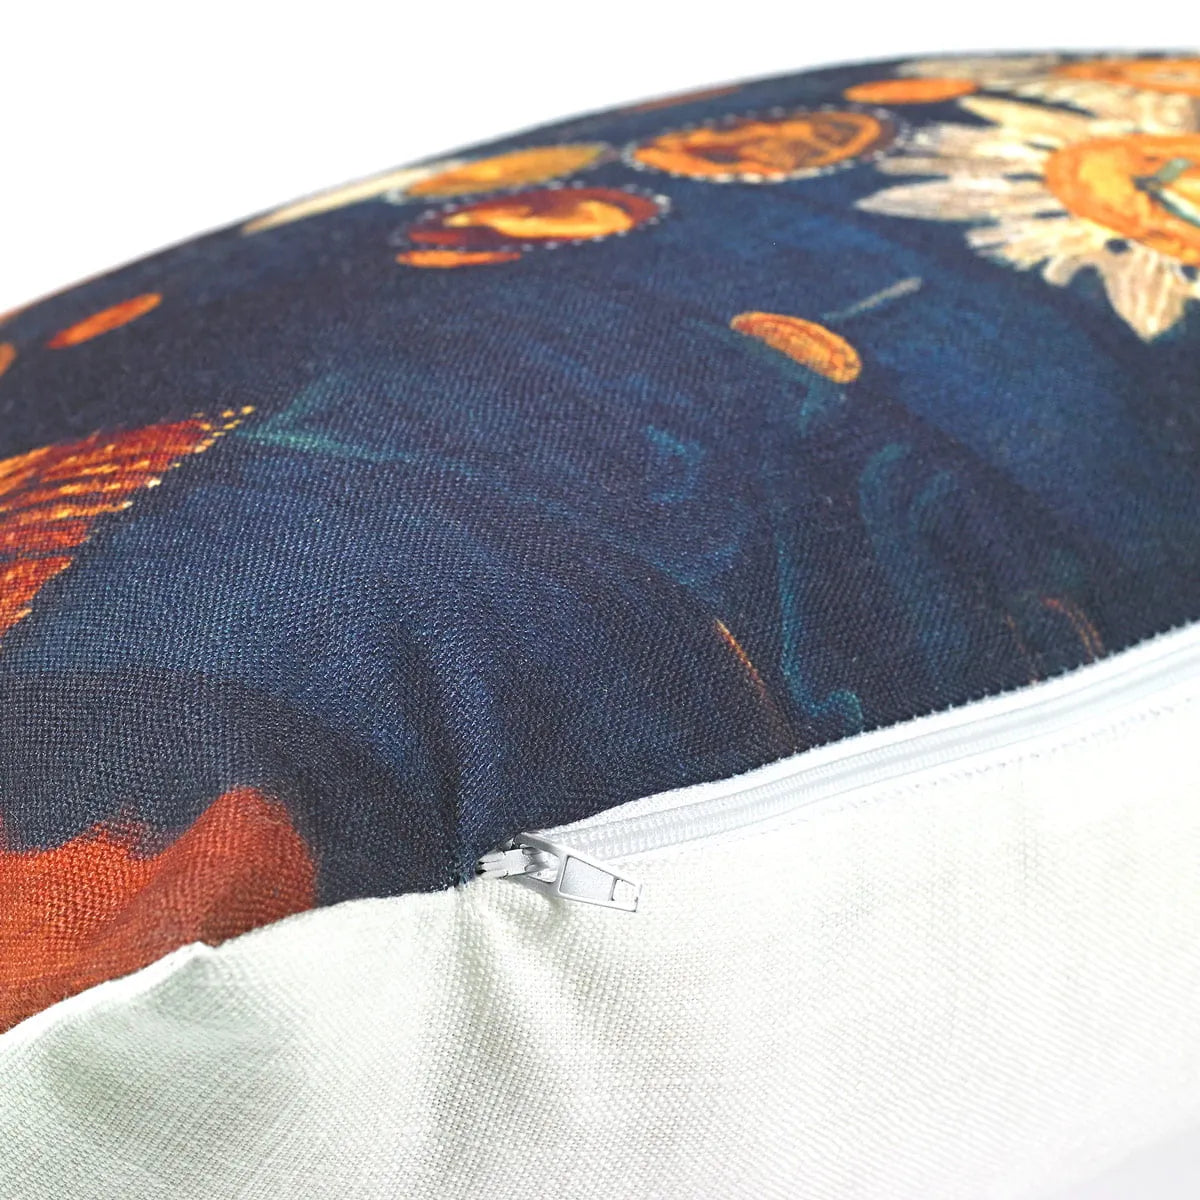 Honeysuckle Too - William Morris Cushion - Decorative Throw Pillow - Throw Pillows - Aesthetic Art